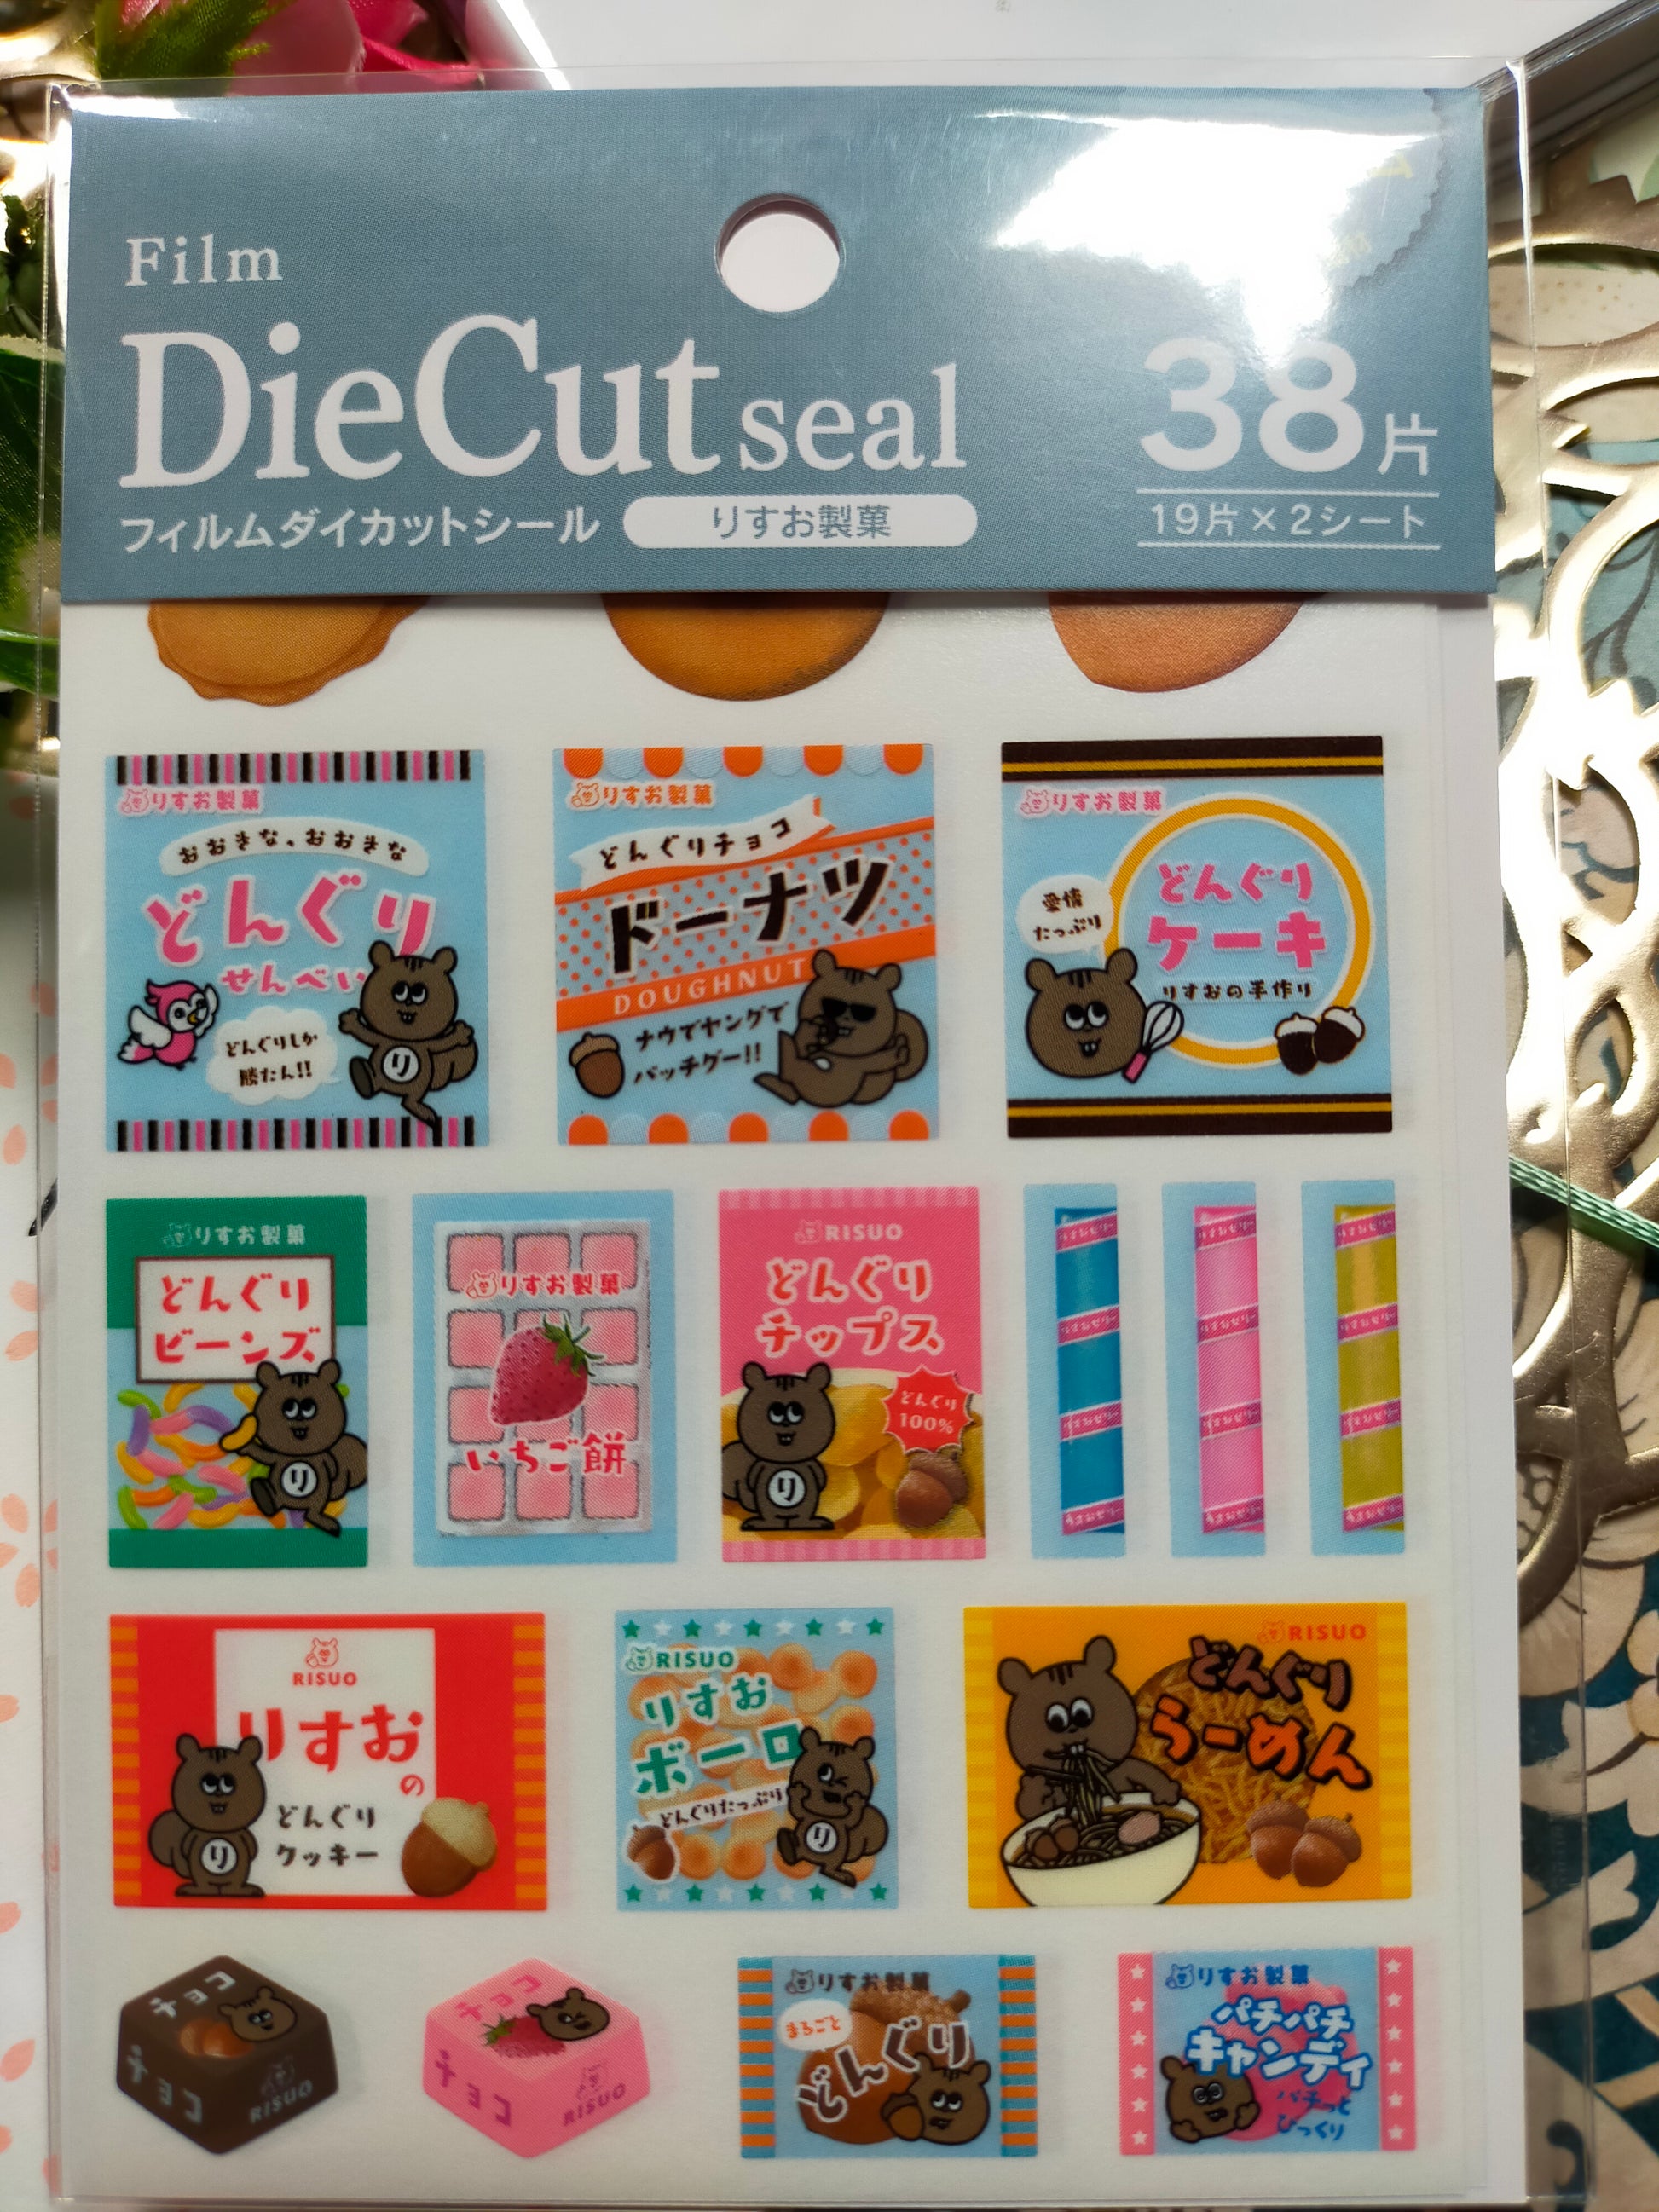 Die cut seal ,Kyowa_ Collage Materials 52 p